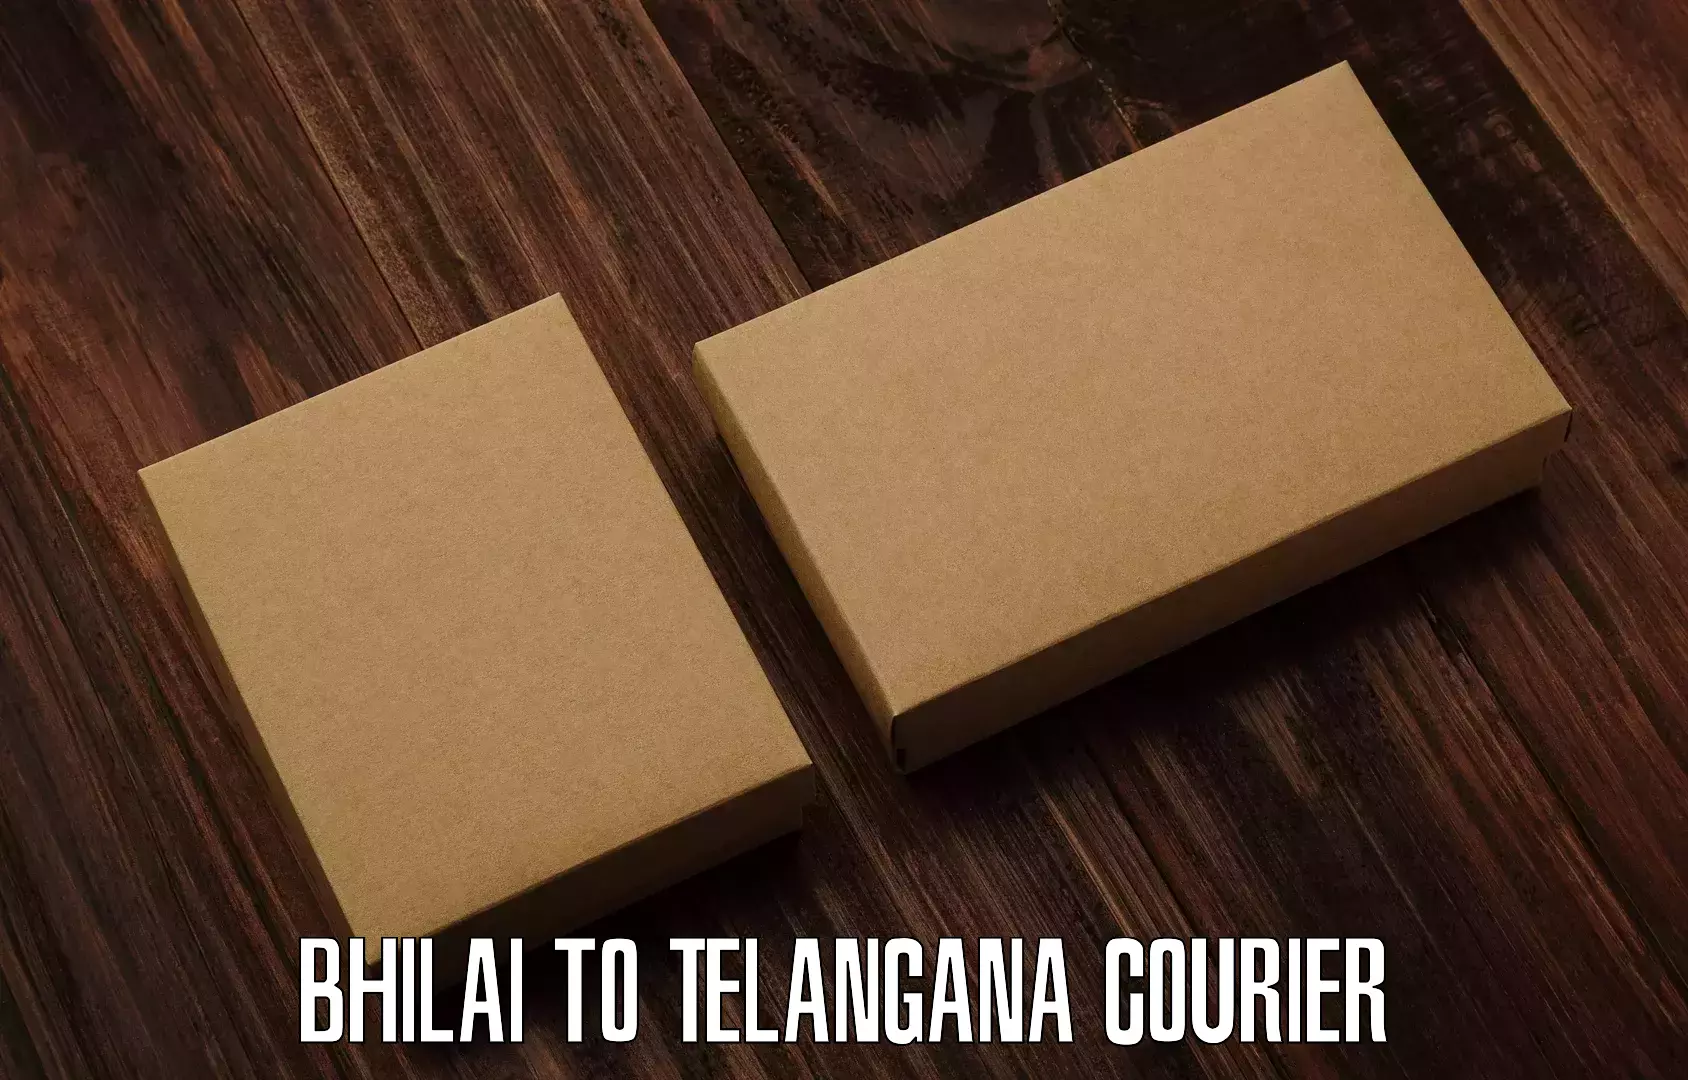 High-capacity parcel service Bhilai to Kacheguda